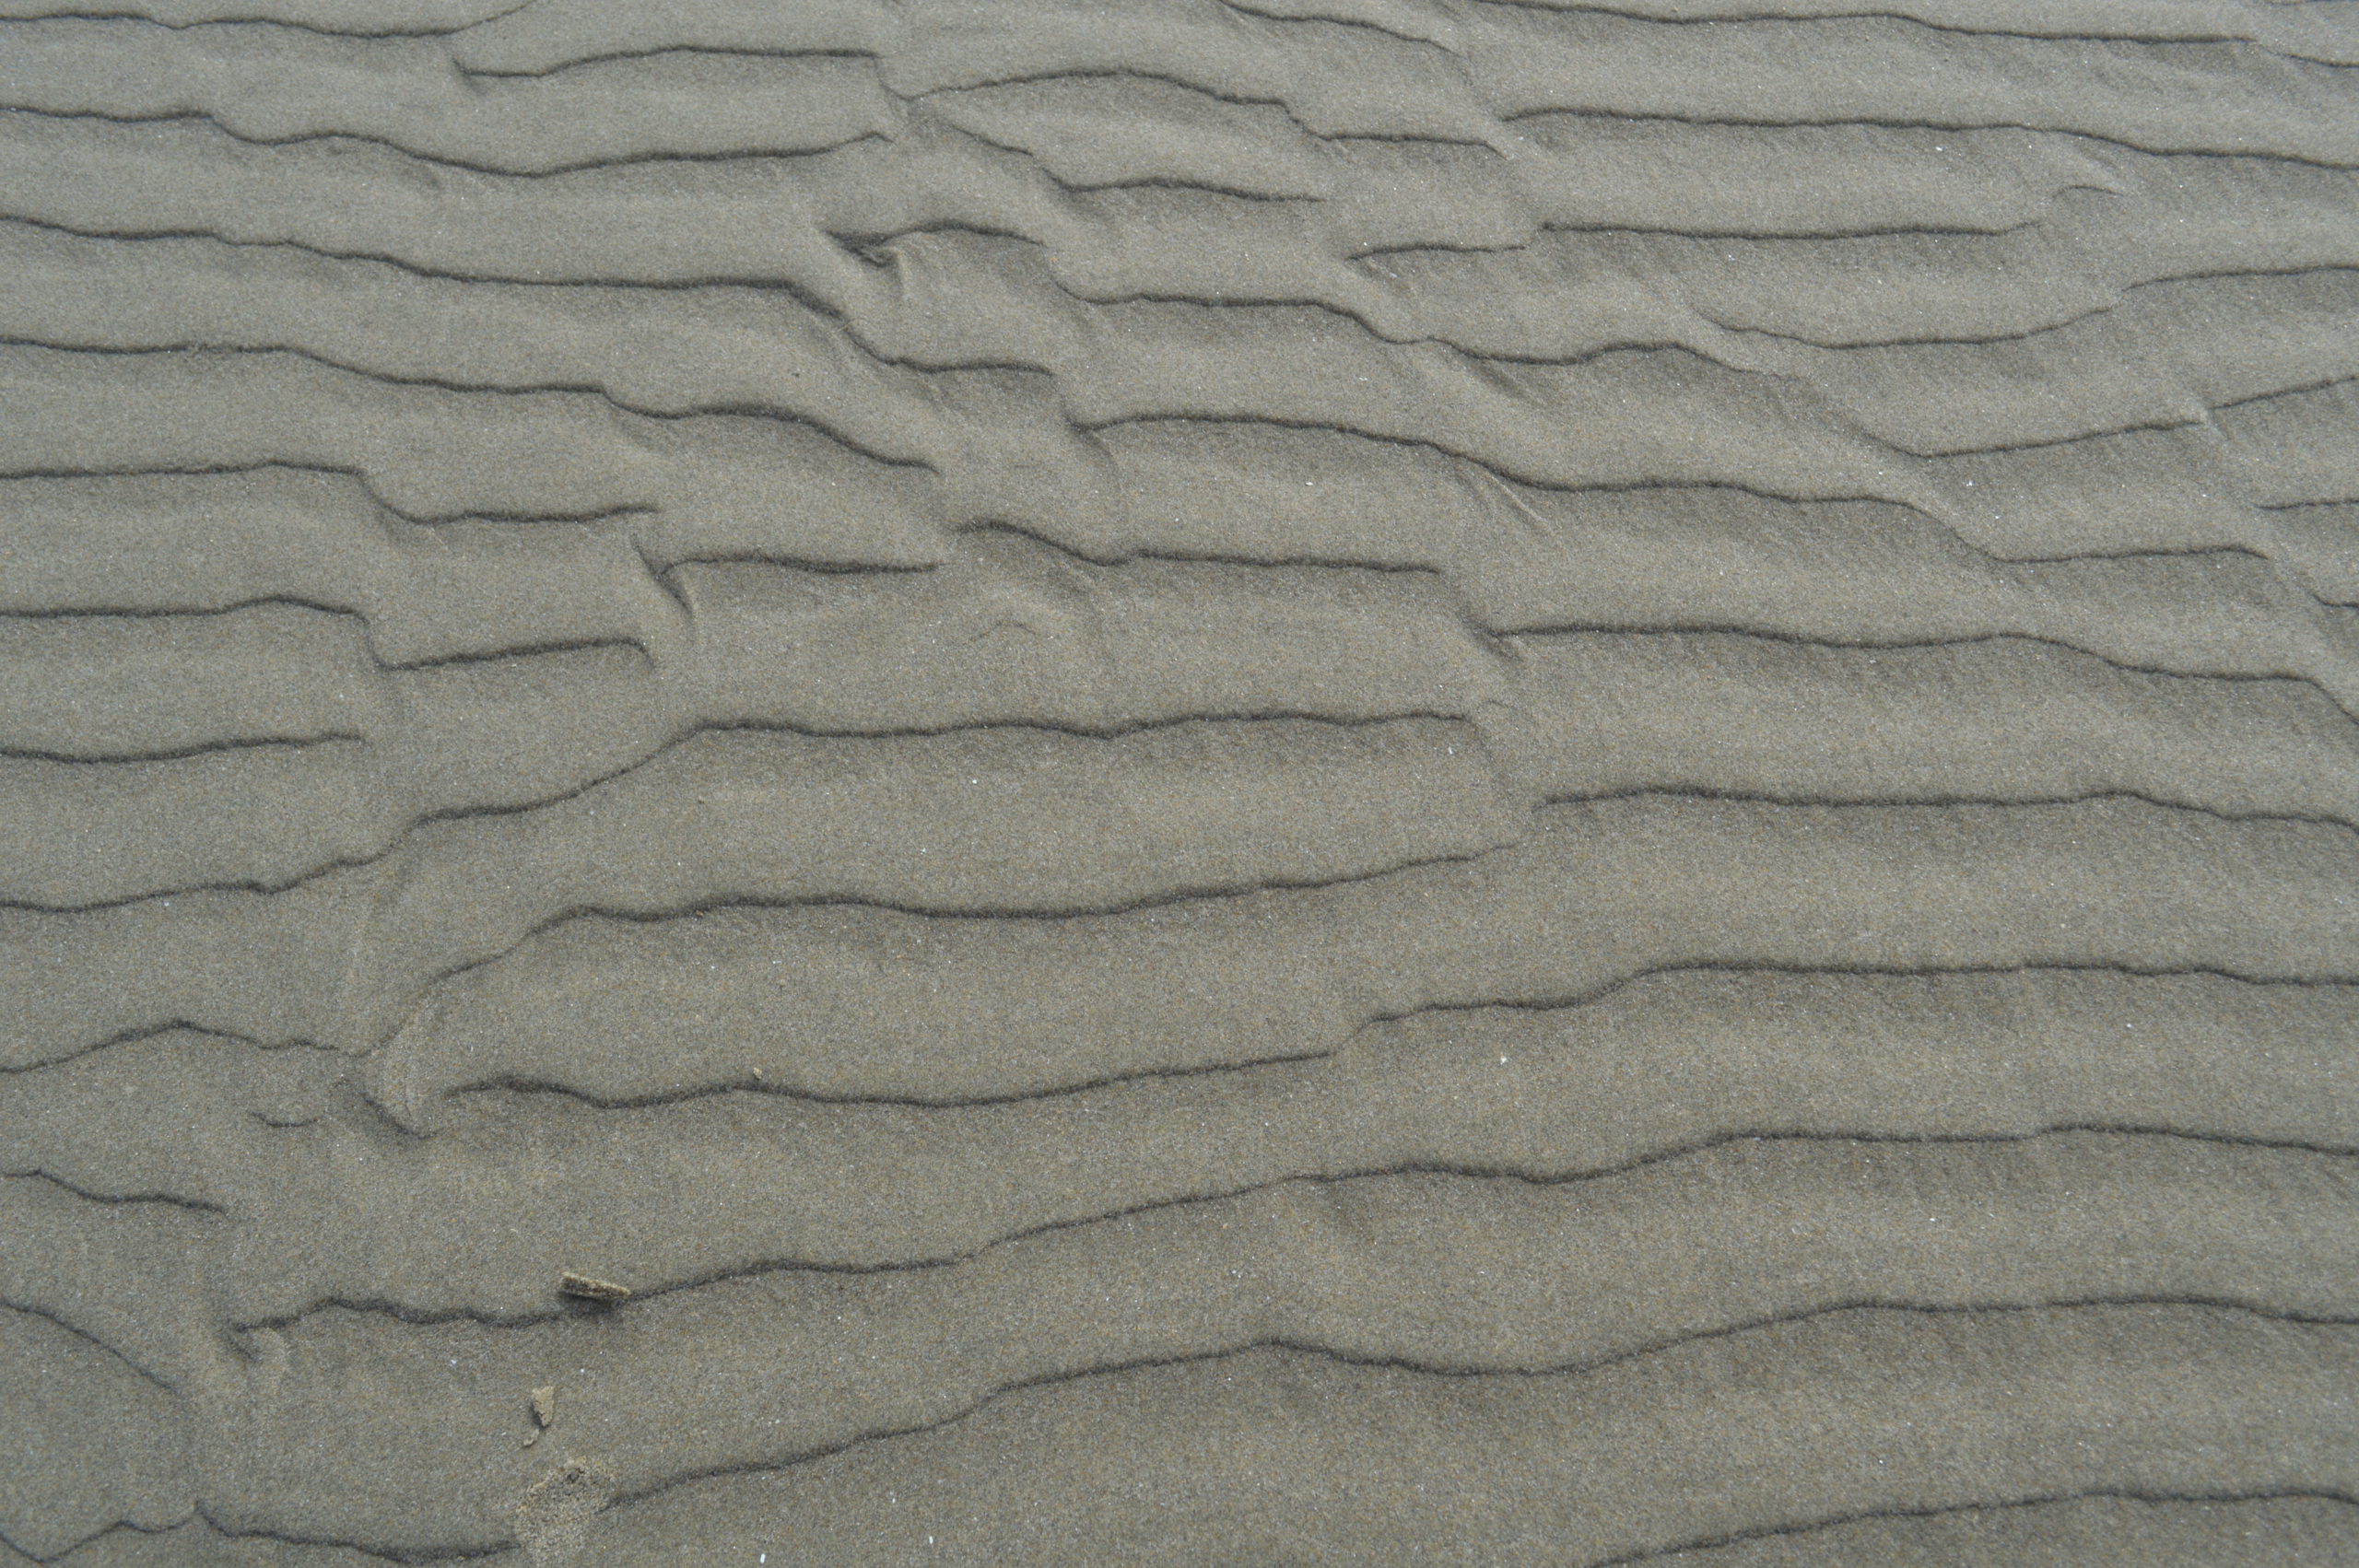 Sand Patterns